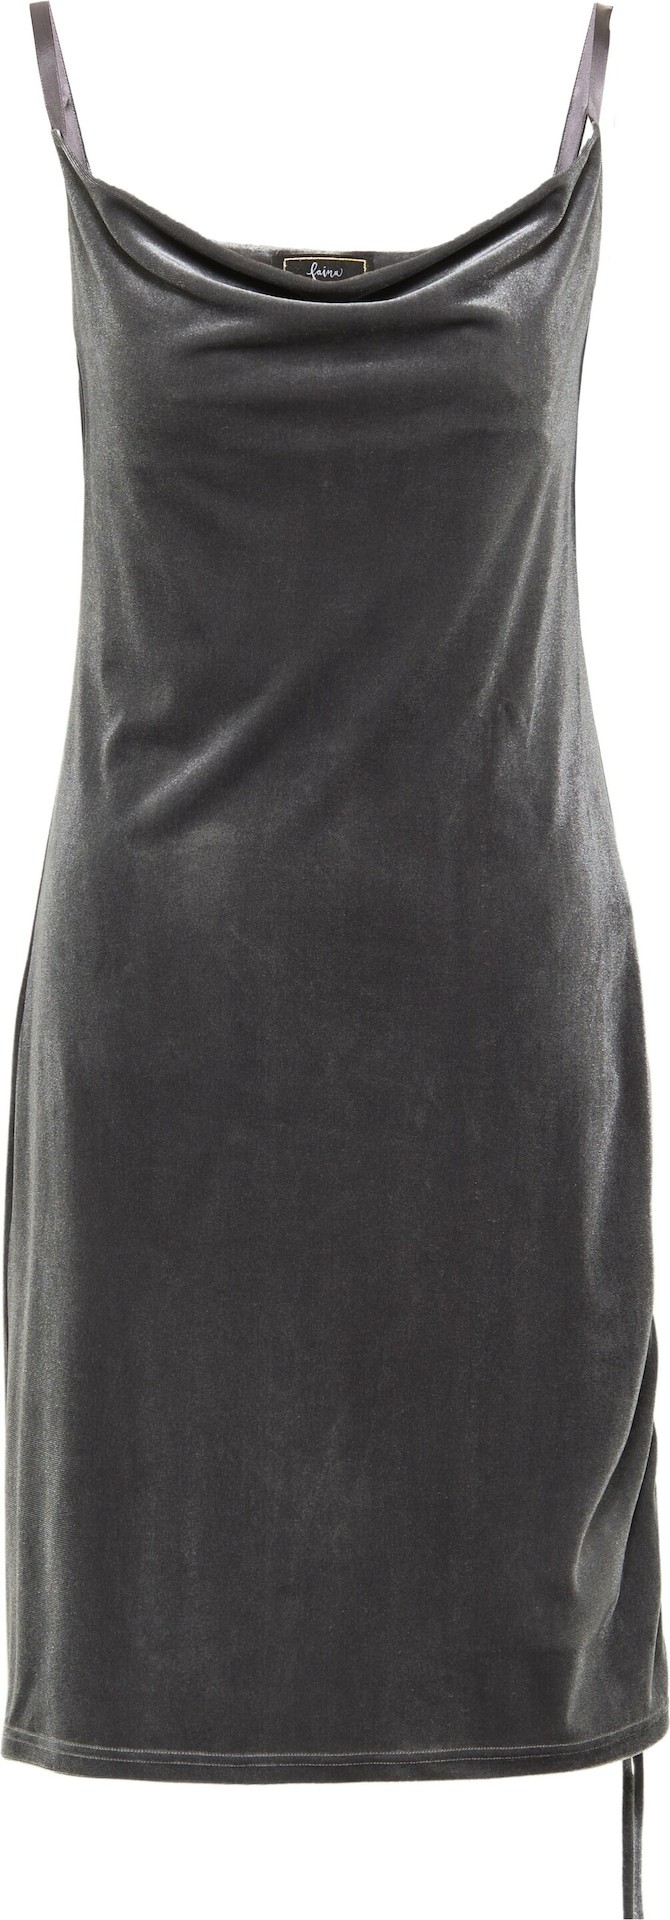 faina Koktejlové šaty tmavě šedá